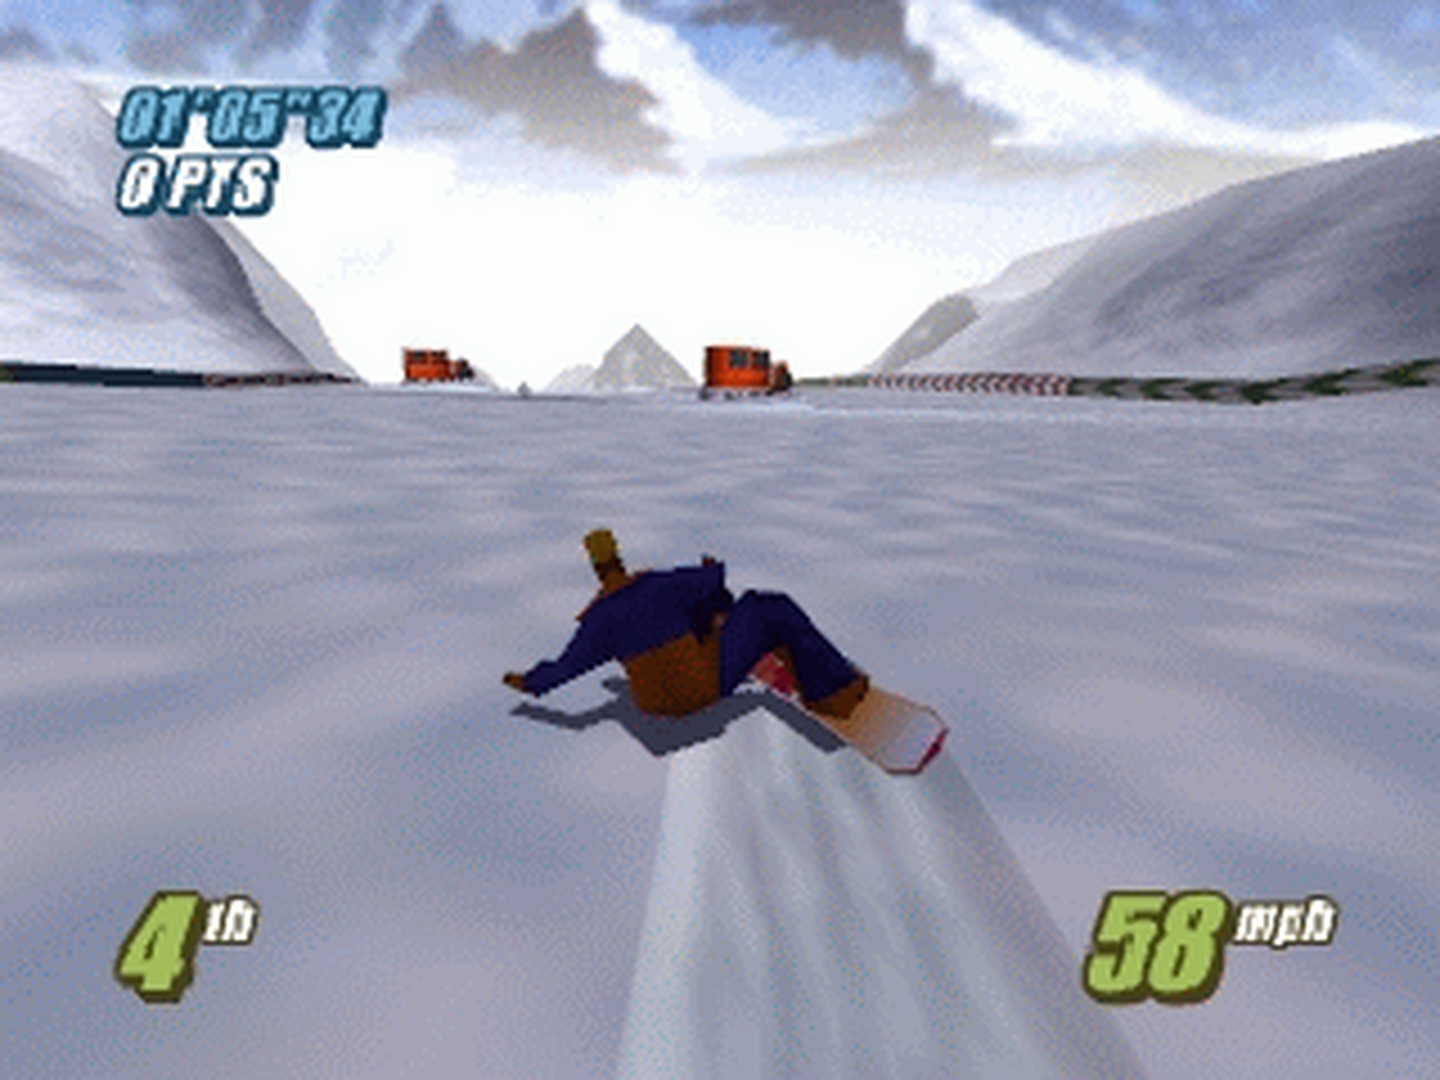 N64 GameBase Twisted_Edge_Extreme_Snowboarding_(U) Midway 1998